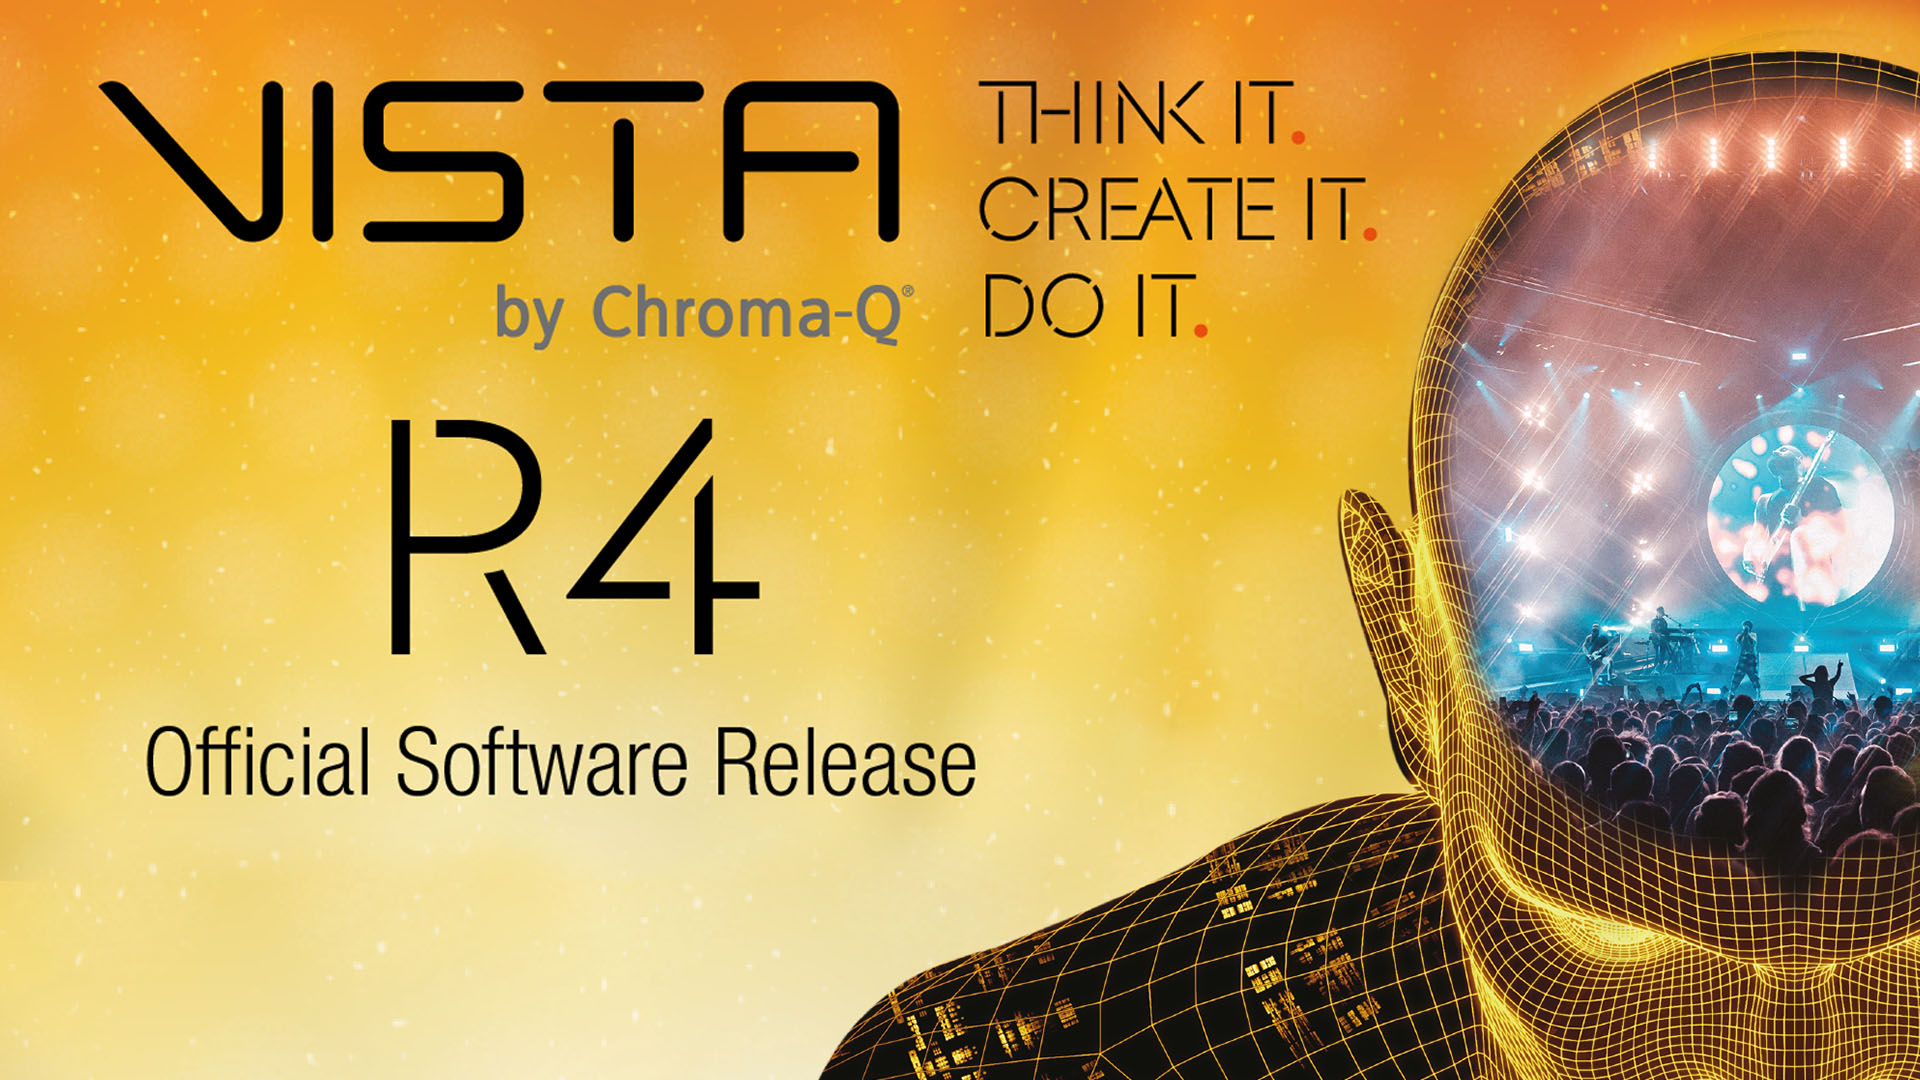 Vista by Chroma-Q Announces Vista 3 Release 4